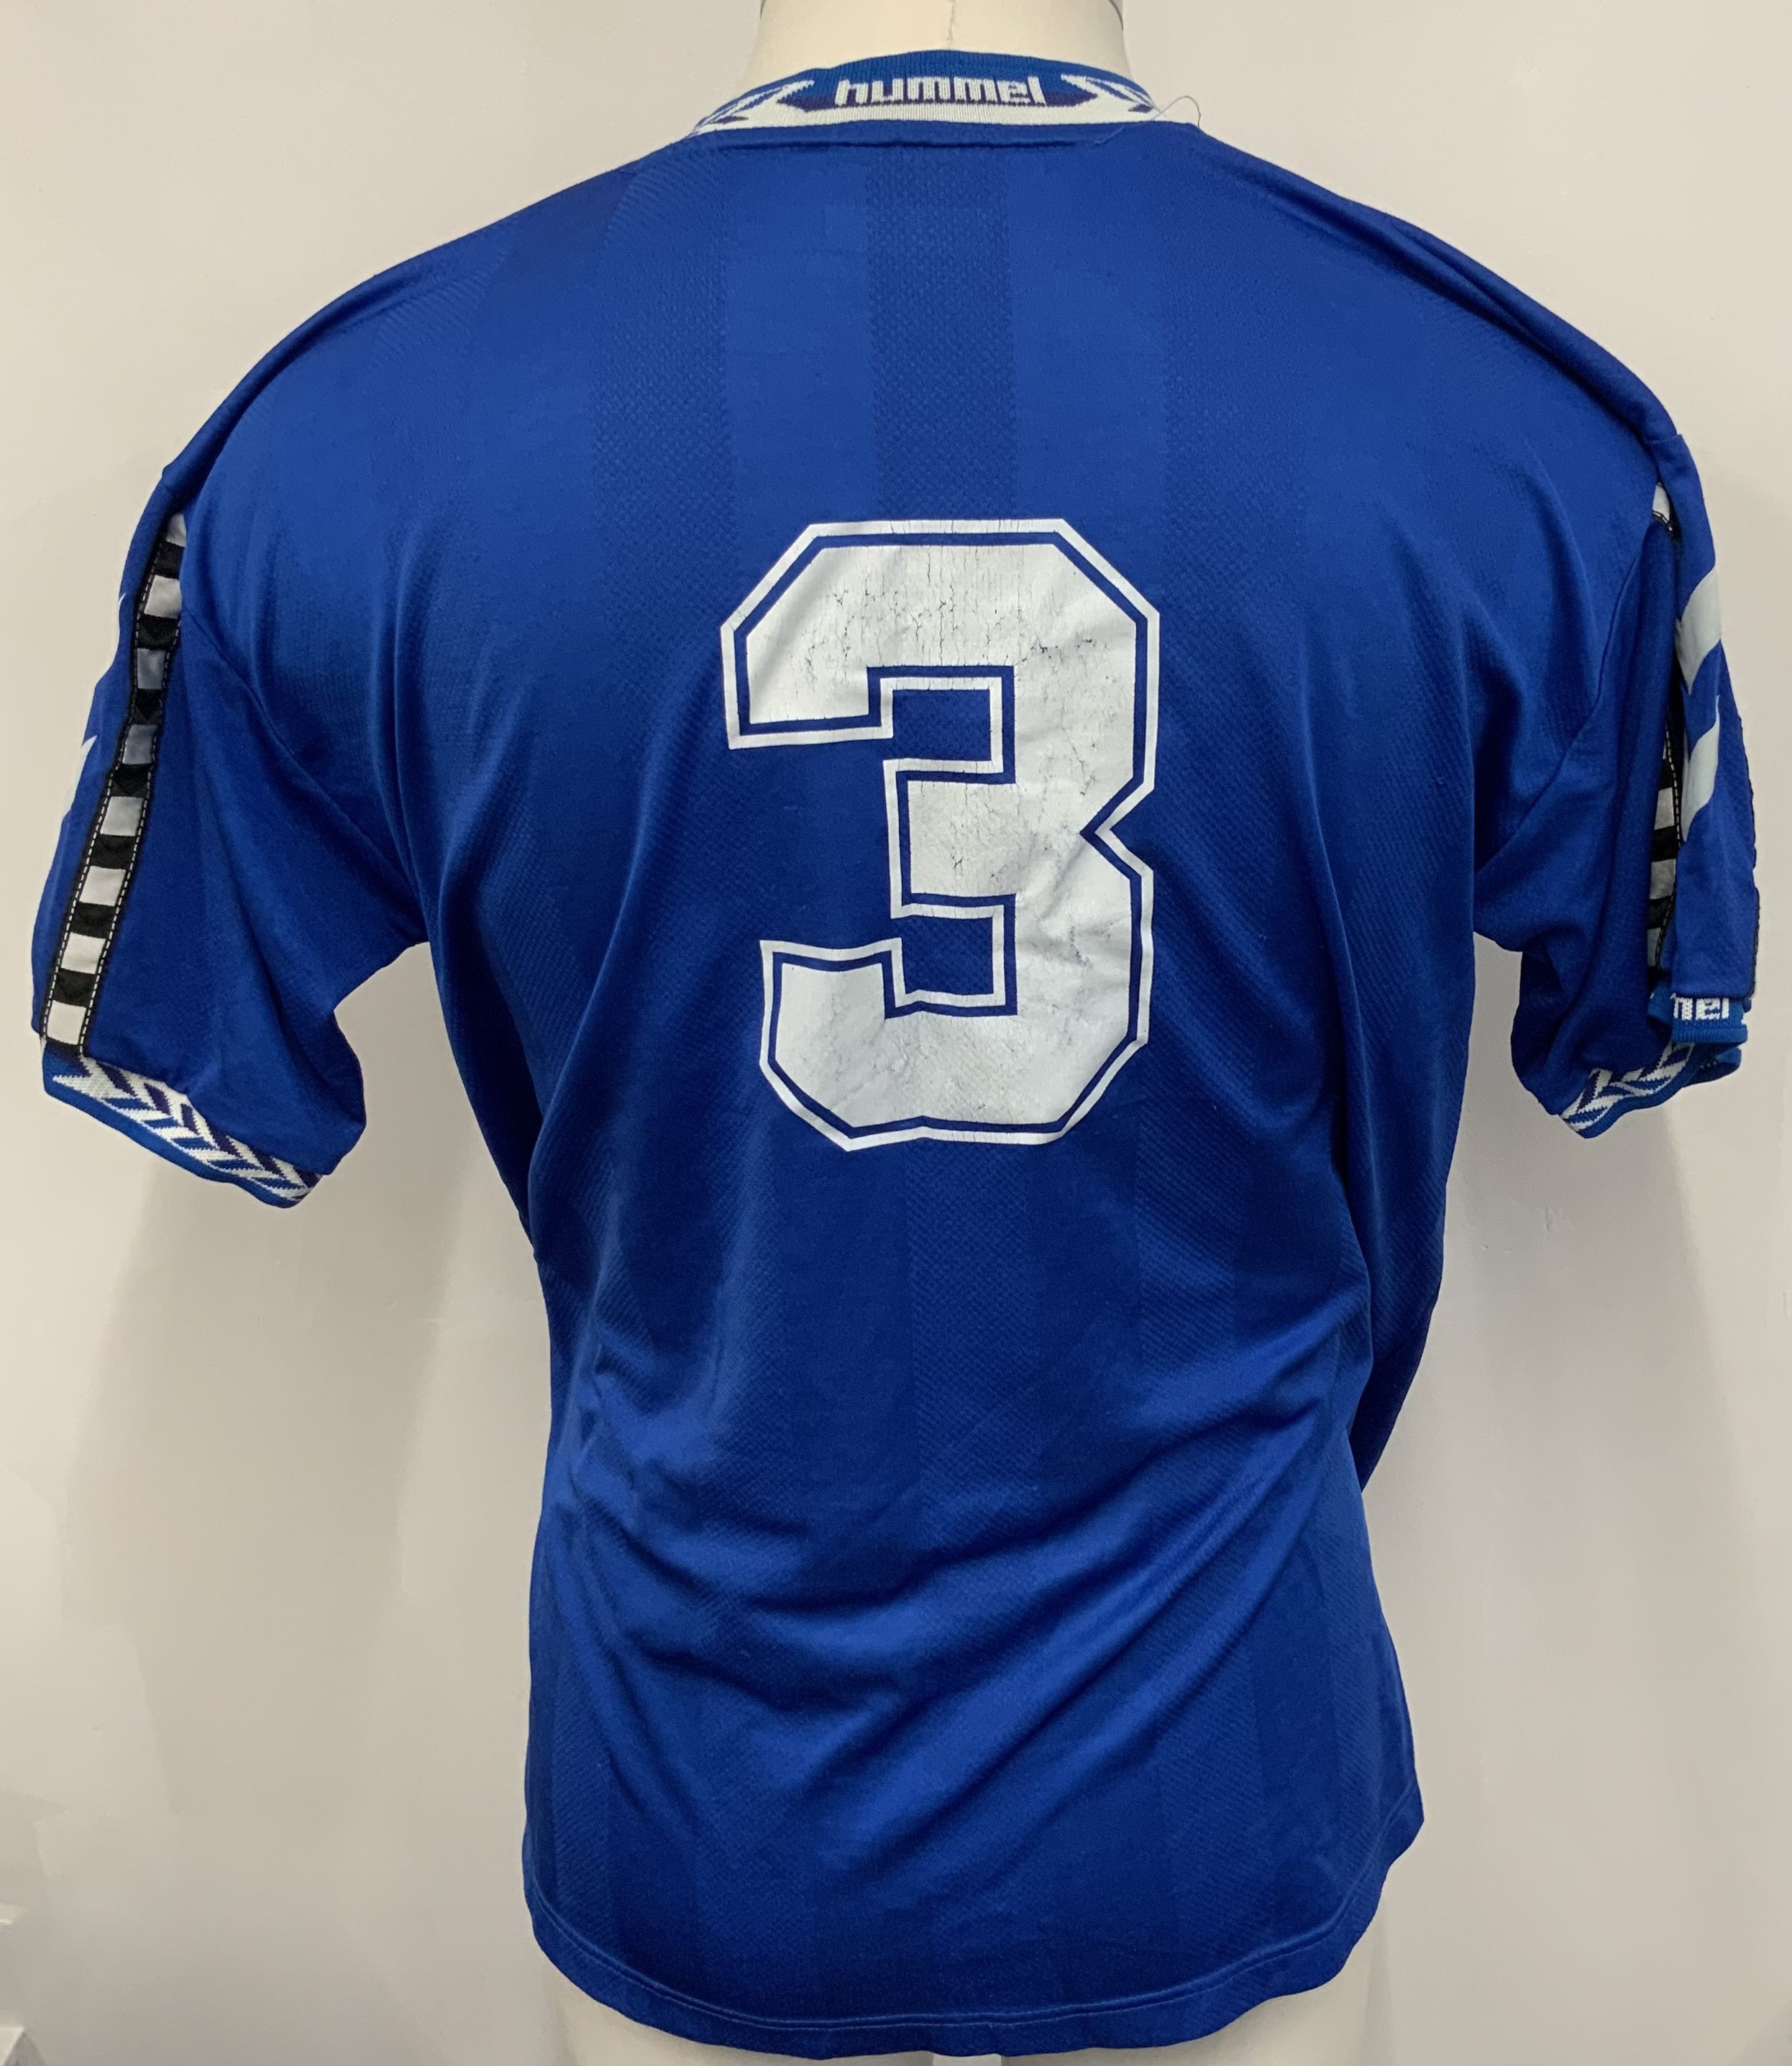 Greve ( Denmark ) Match Worn Football Shirt: Blue - Image 2 of 3